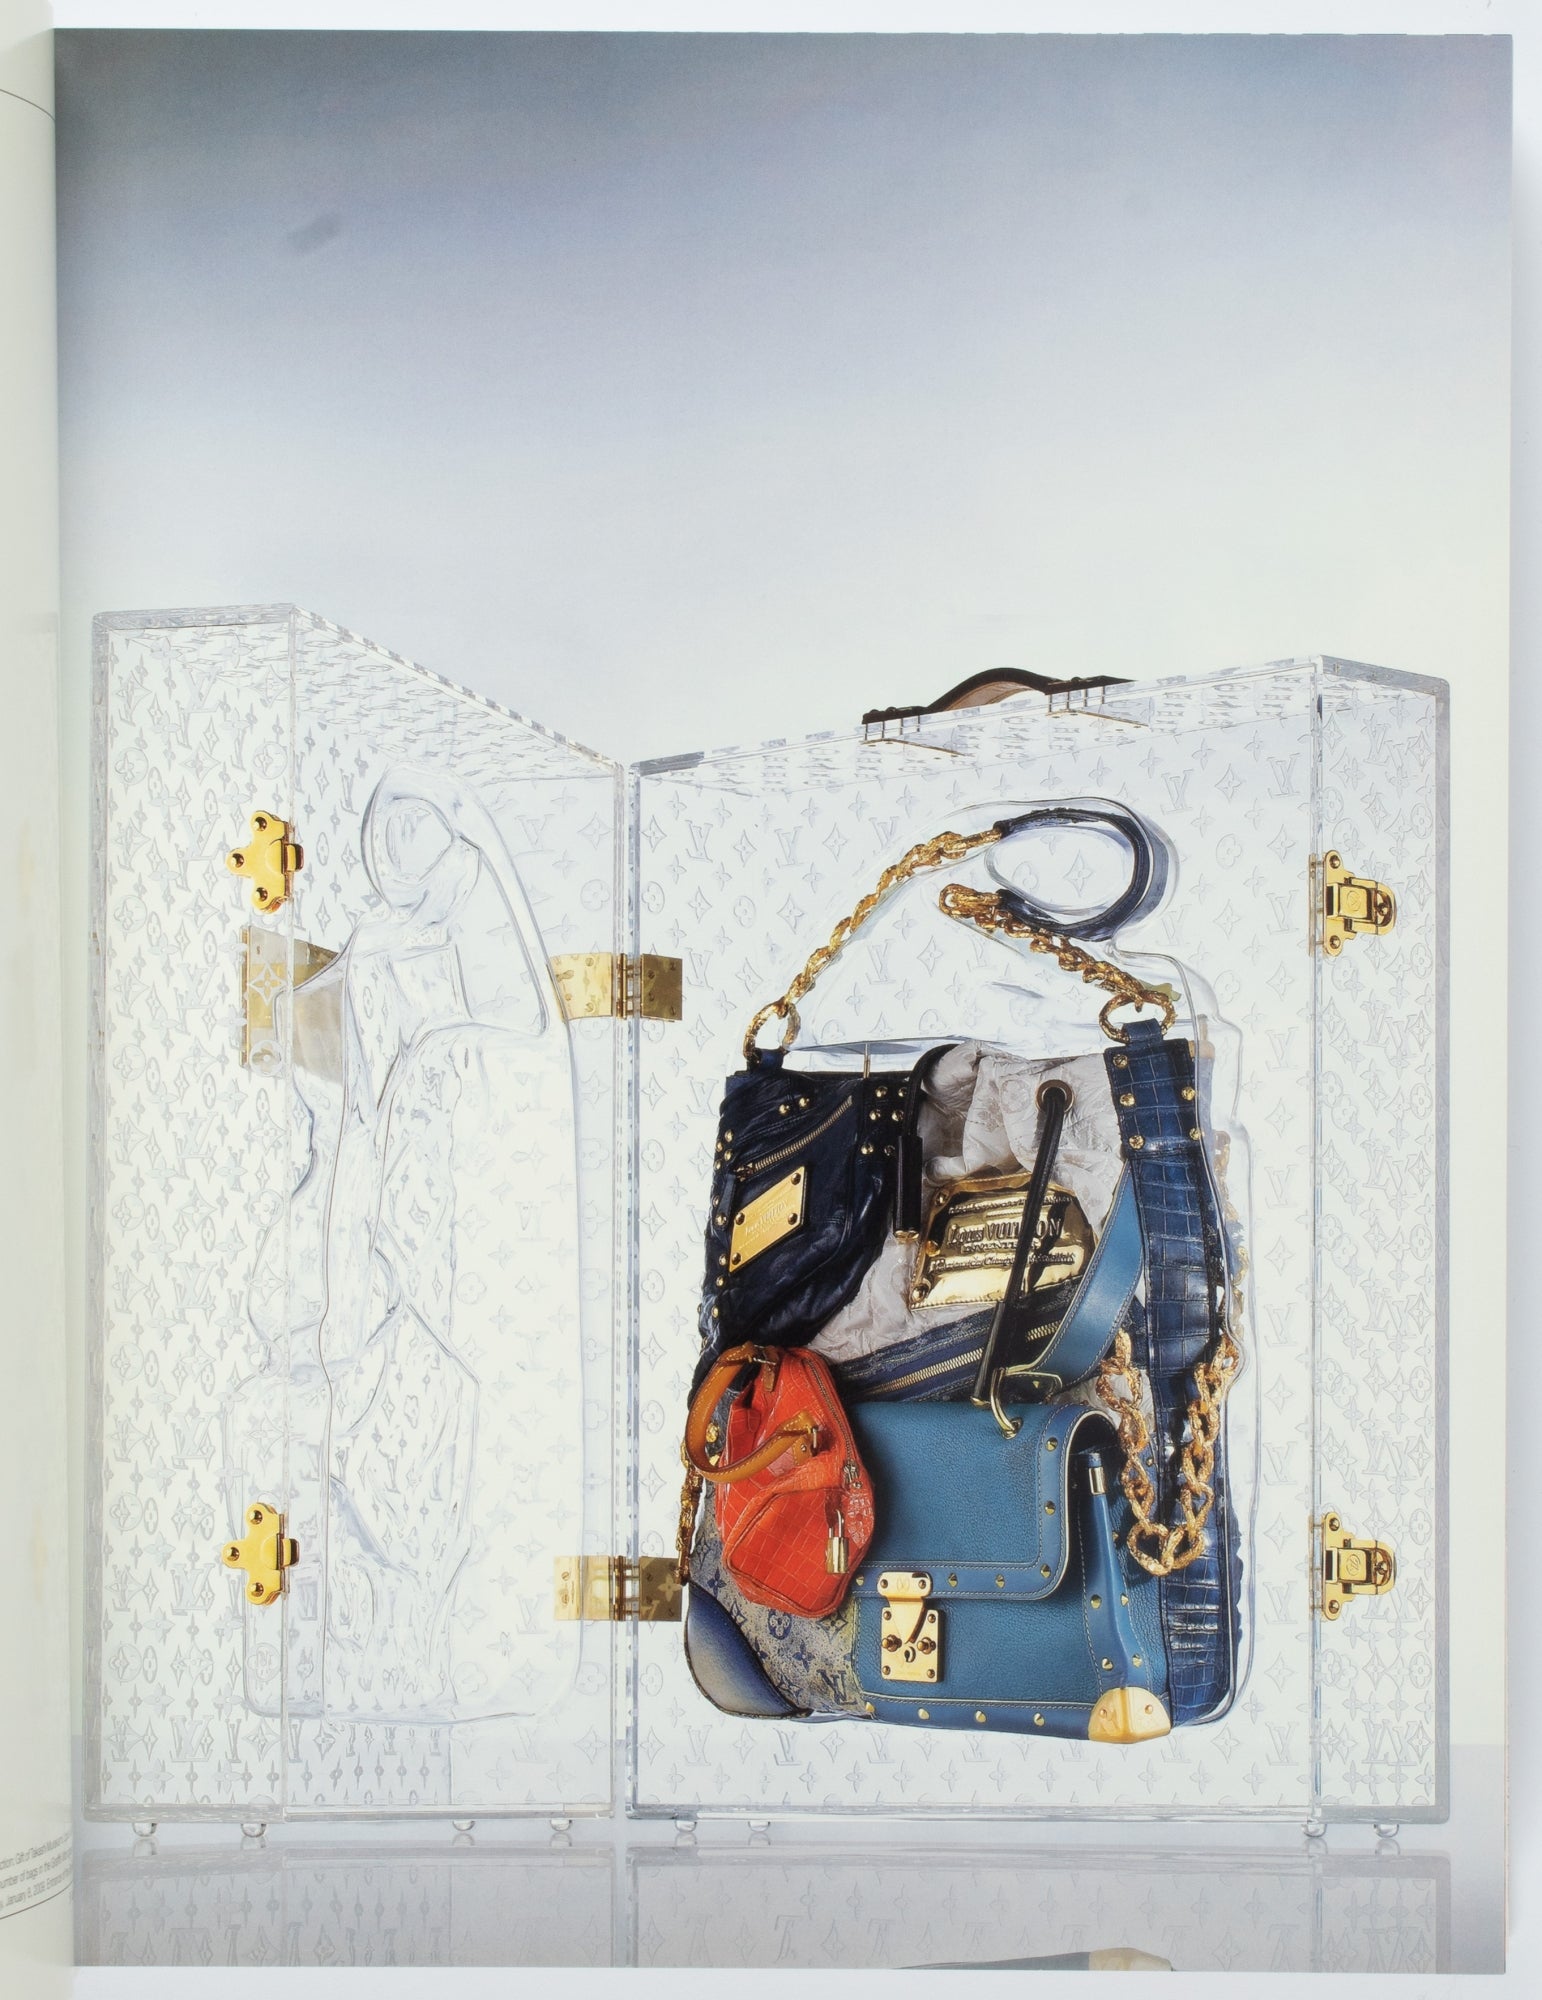 Louis Vuitton: Art, Fashion and Architecture by Takashi Murakami on Harper's